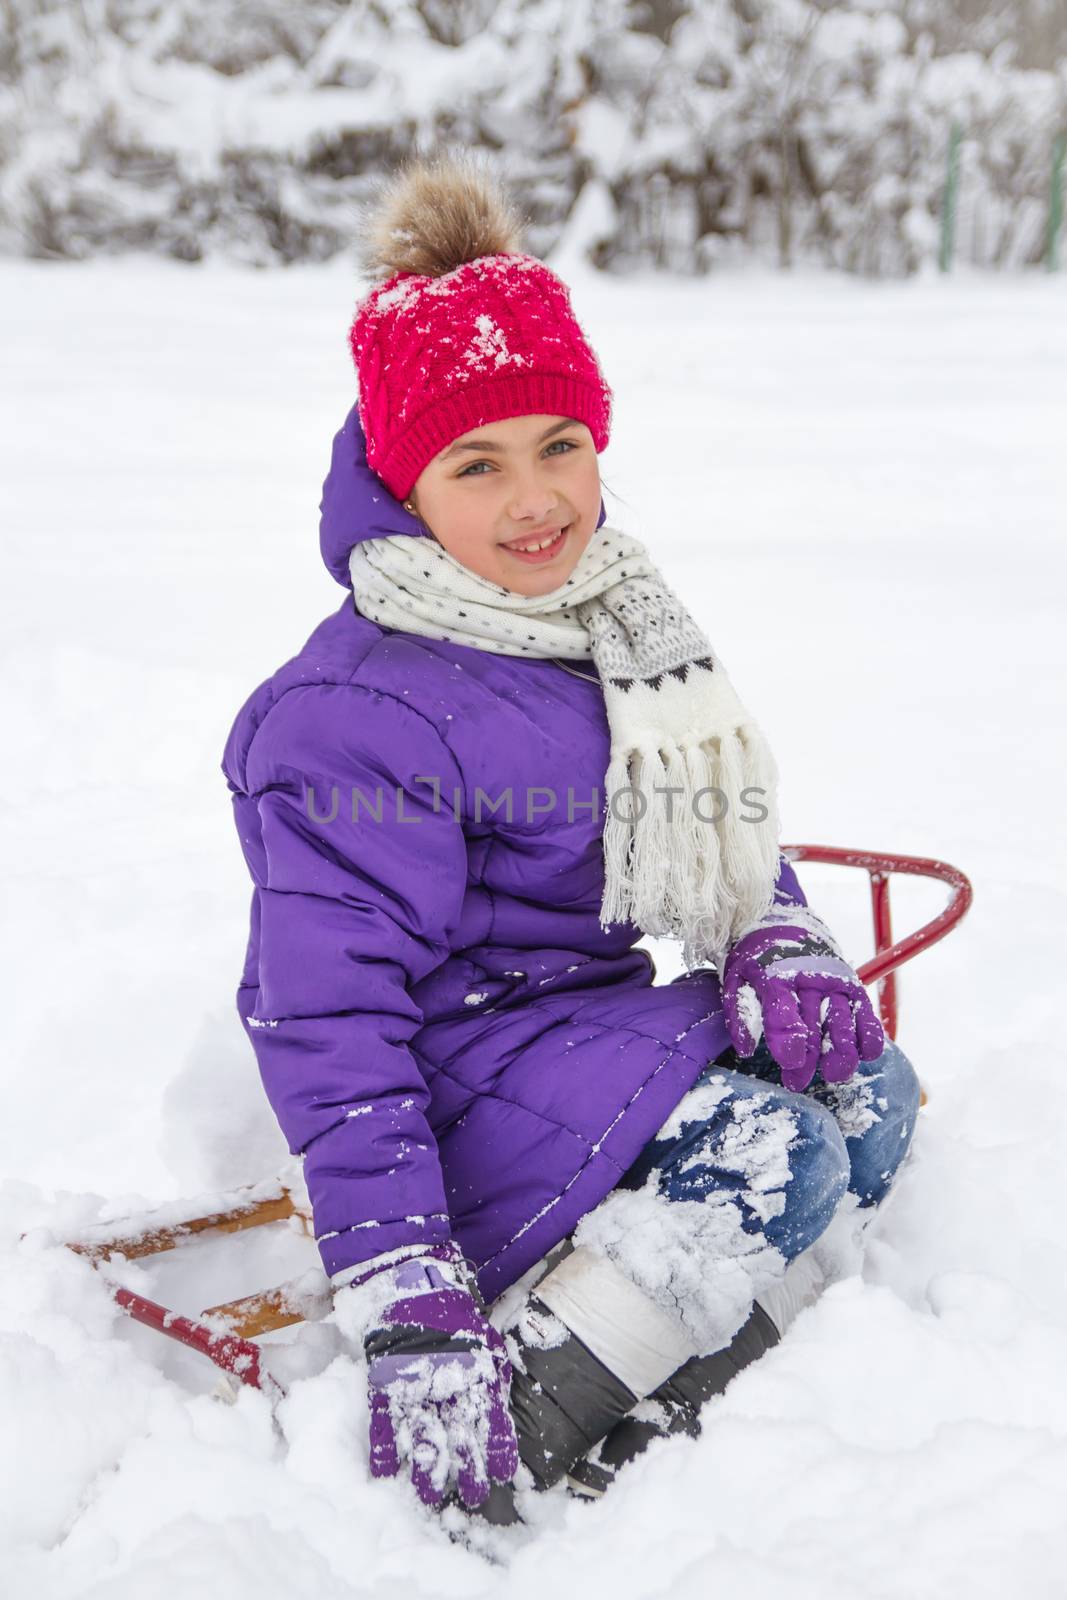 Smiling child girl in snowy park on sledge